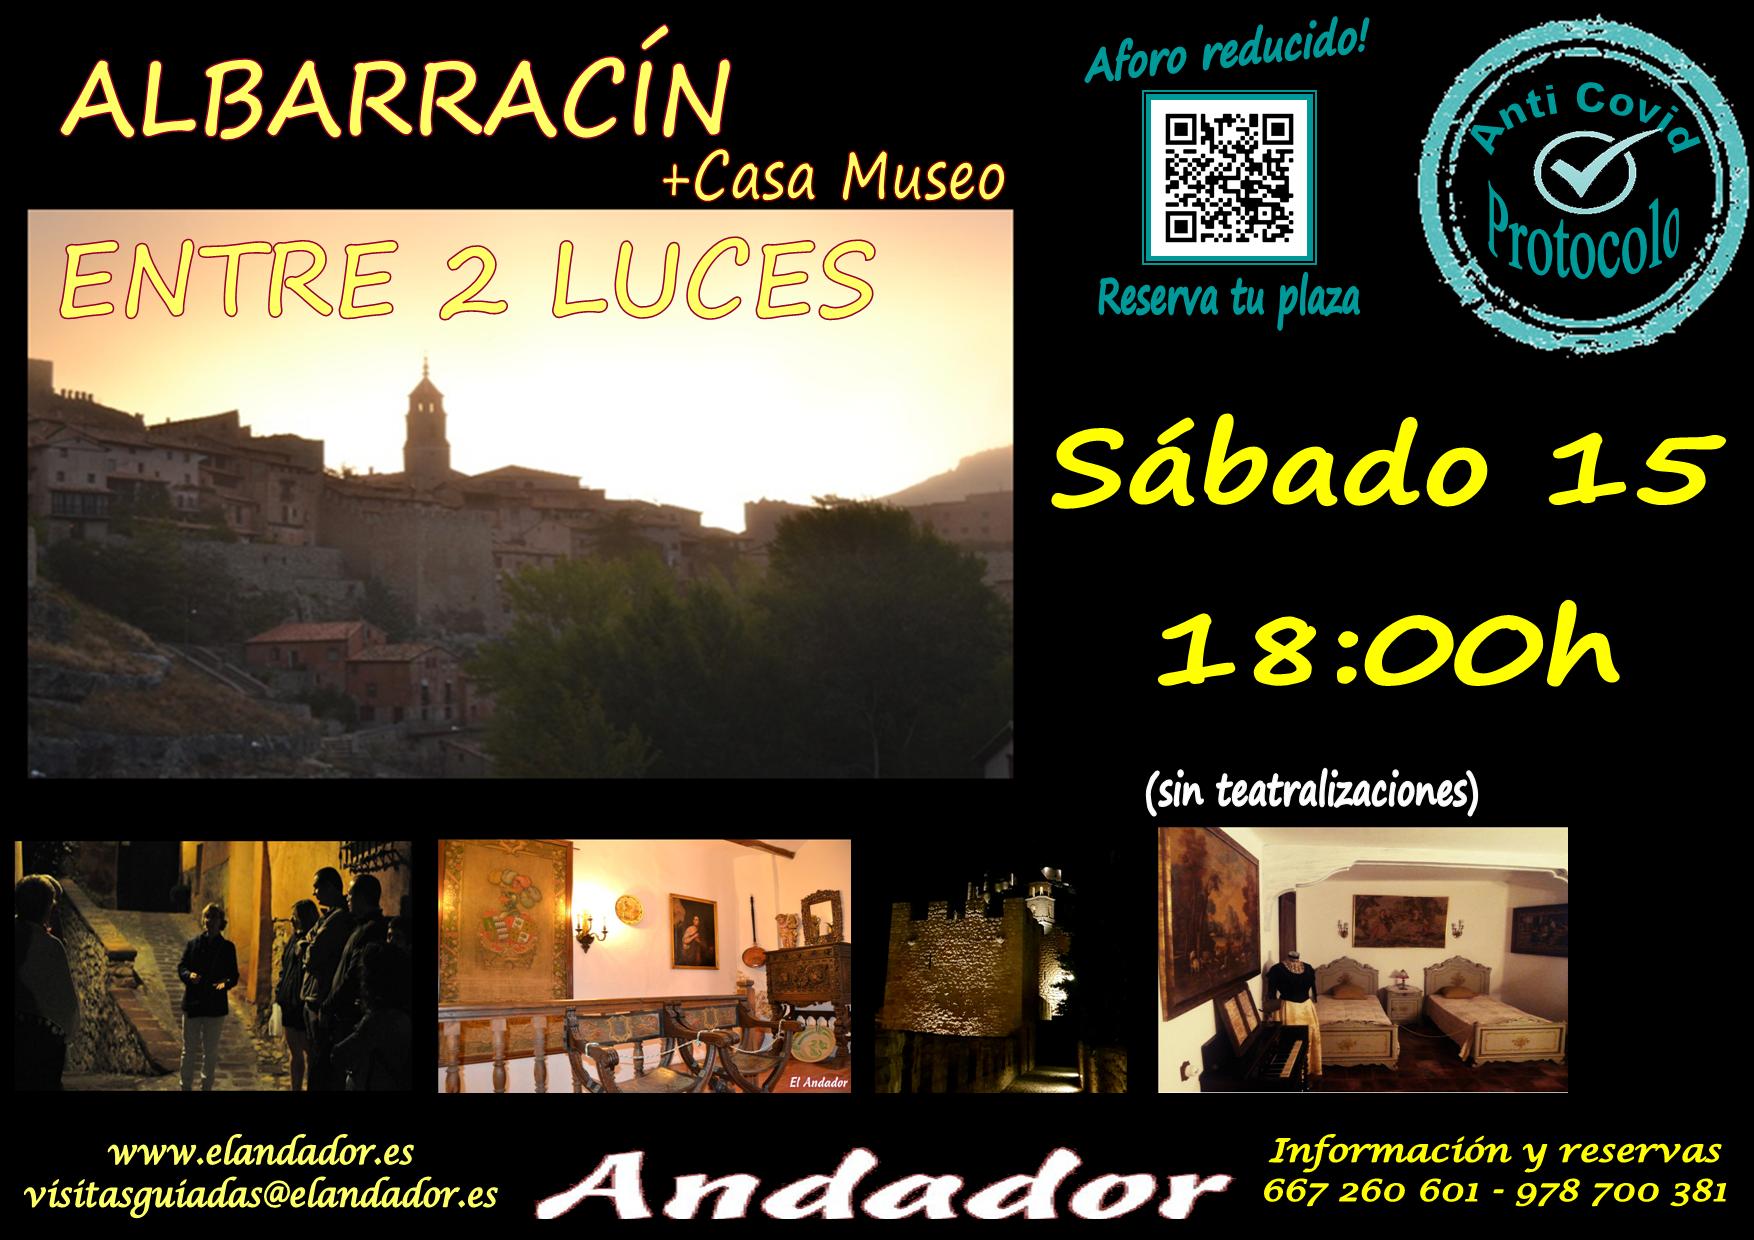 Este sábado 15, Visita Guiada en Albarracín Especial Entre 2 Luces! Reserva tu plaza!